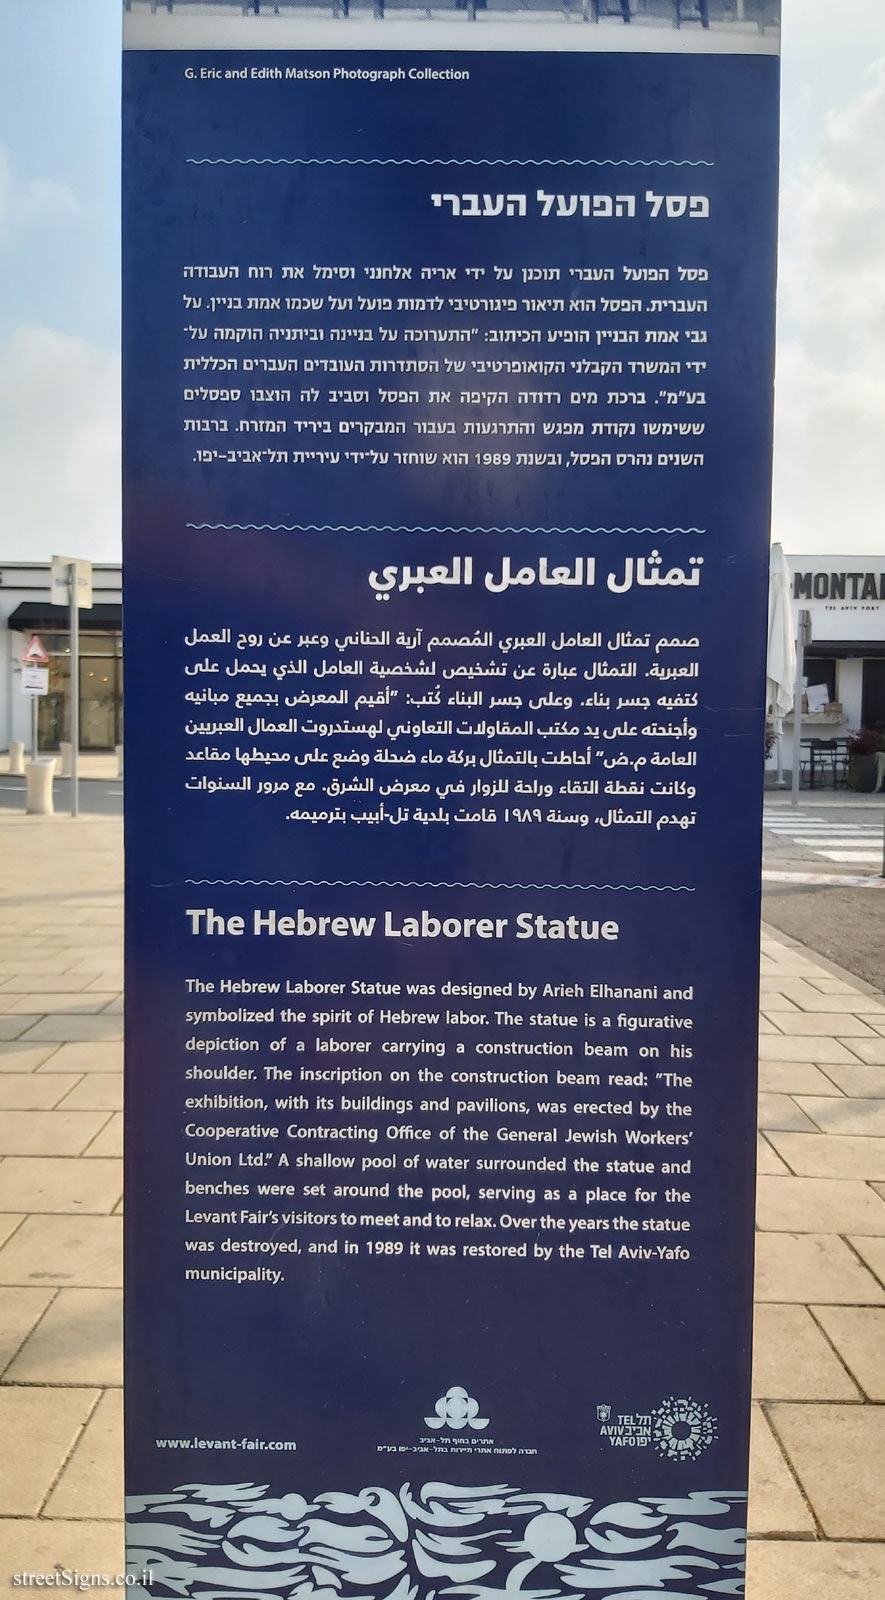 Tel Aviv - Levant Fair - The Hebrew Laborer Statue